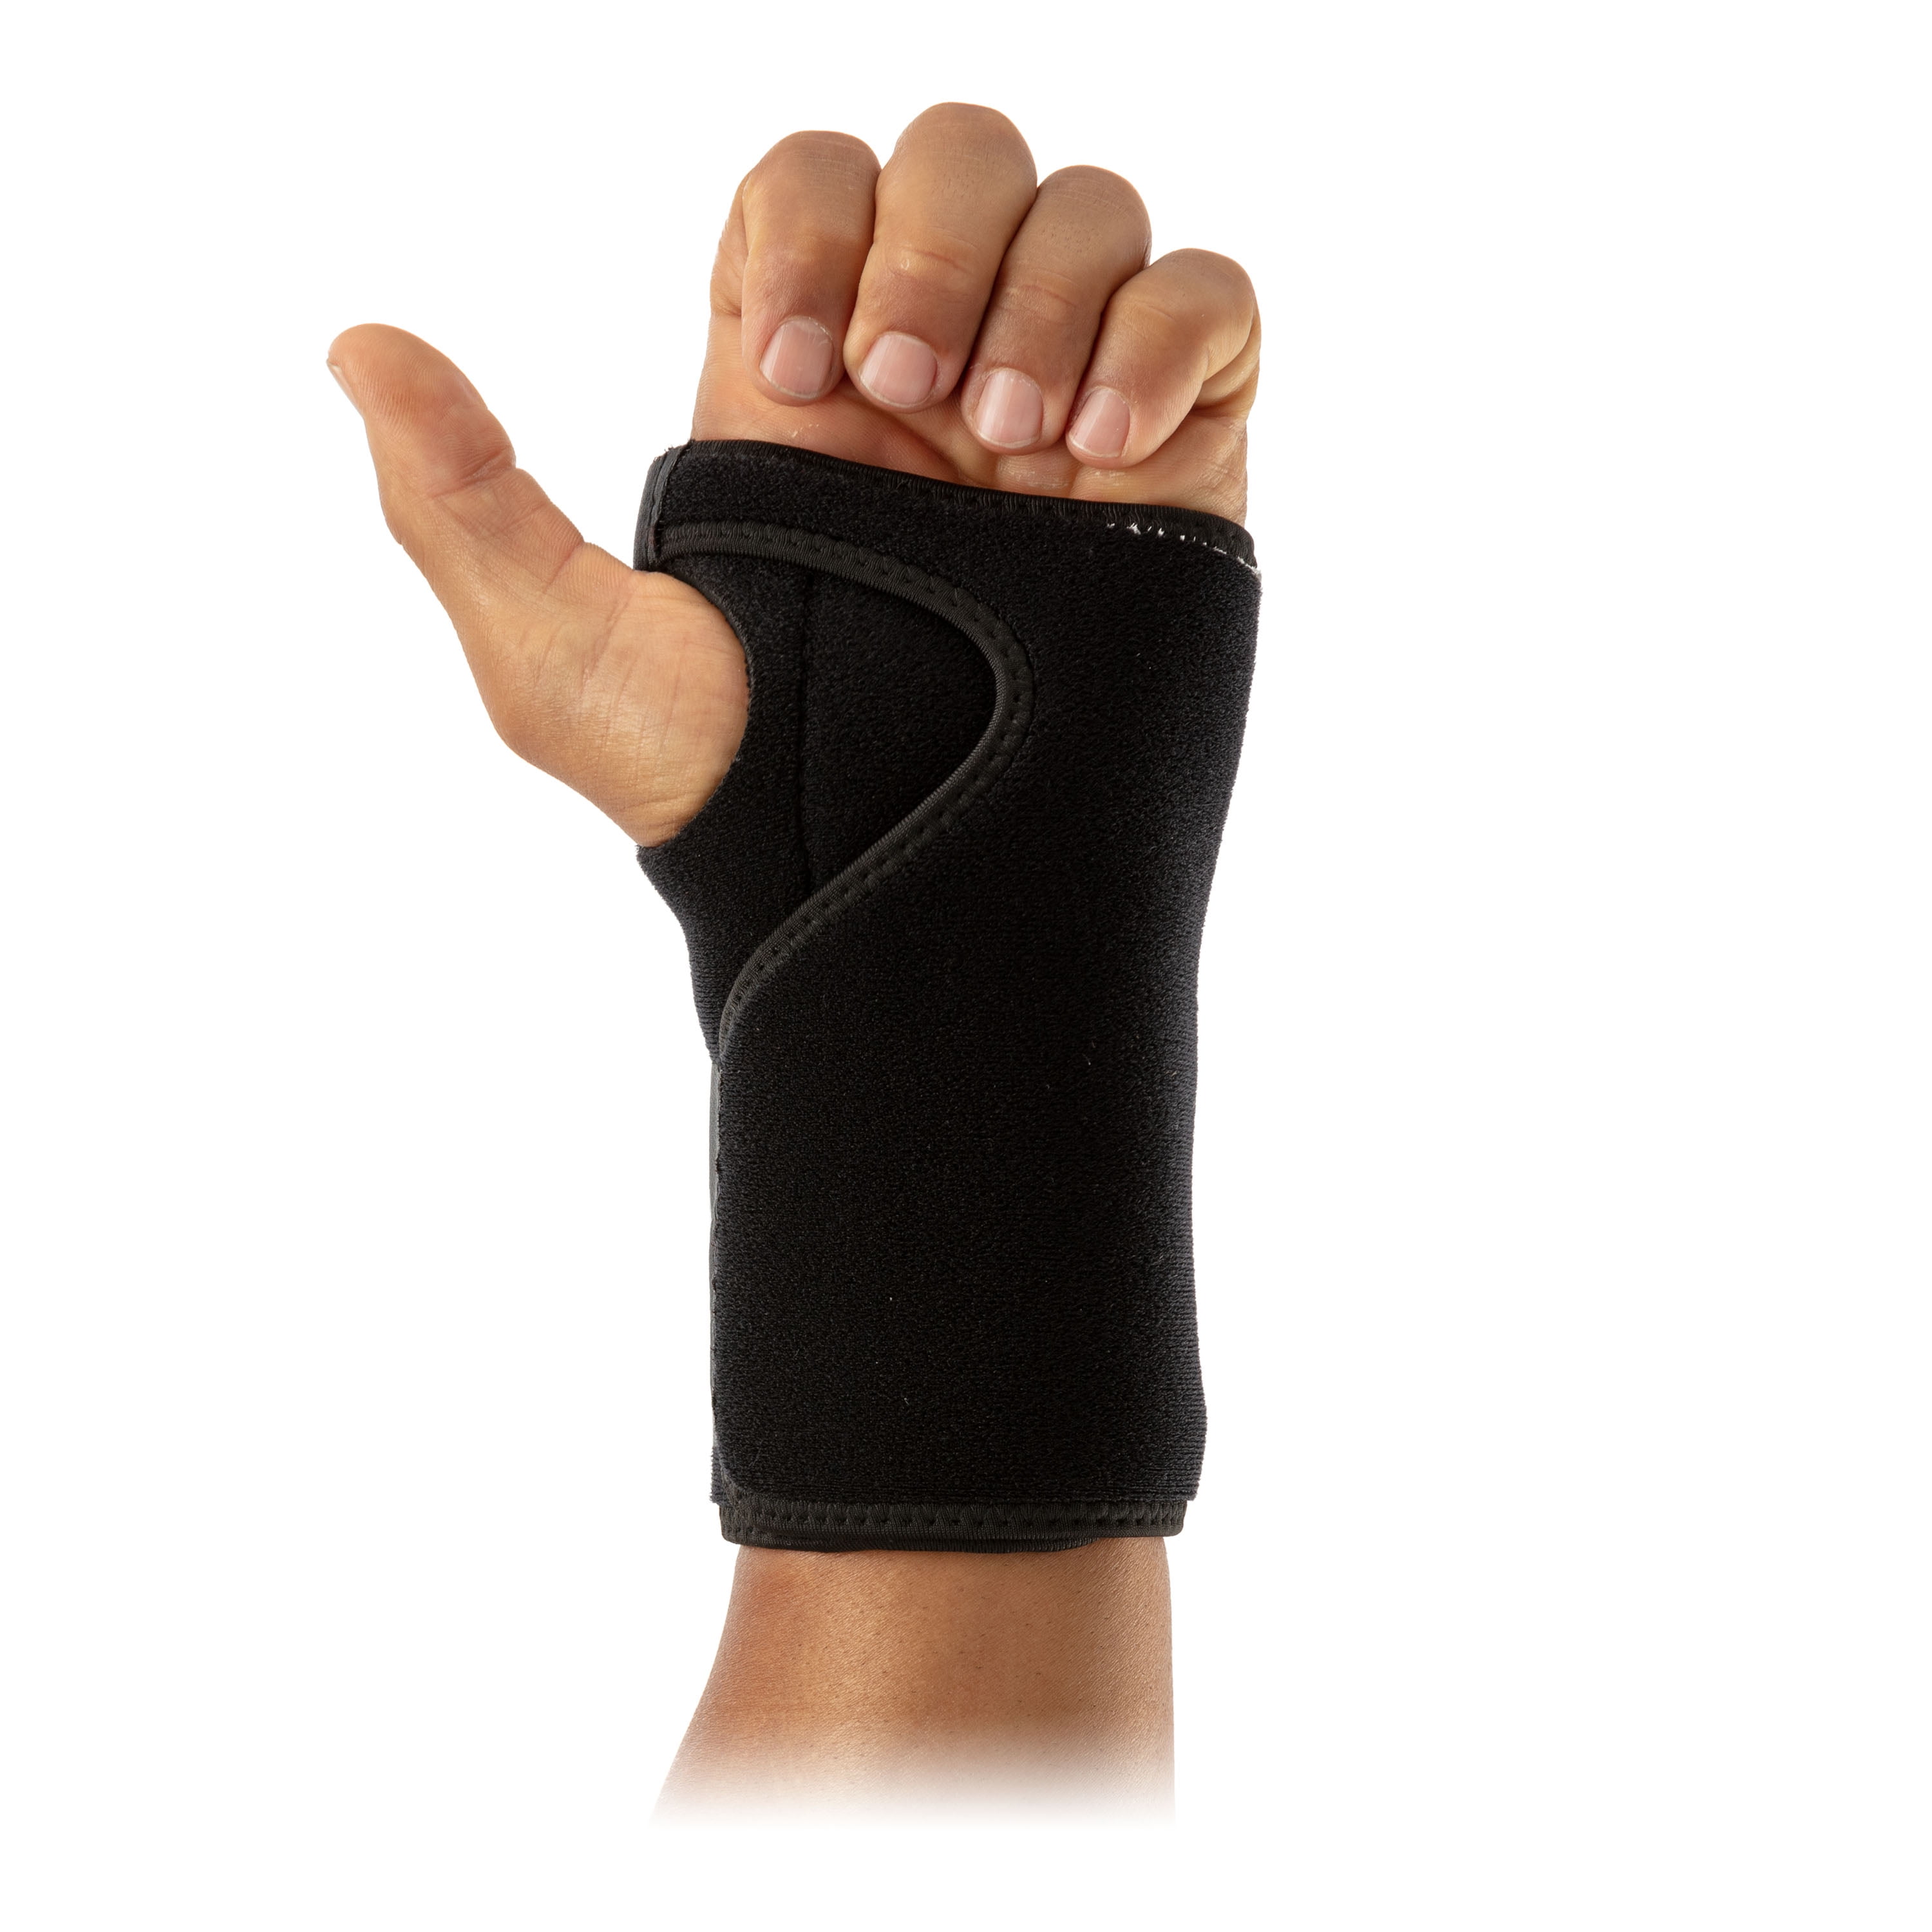 McDavid Sport Wrist Brace, Black, Adjustable, One Size Fits Most